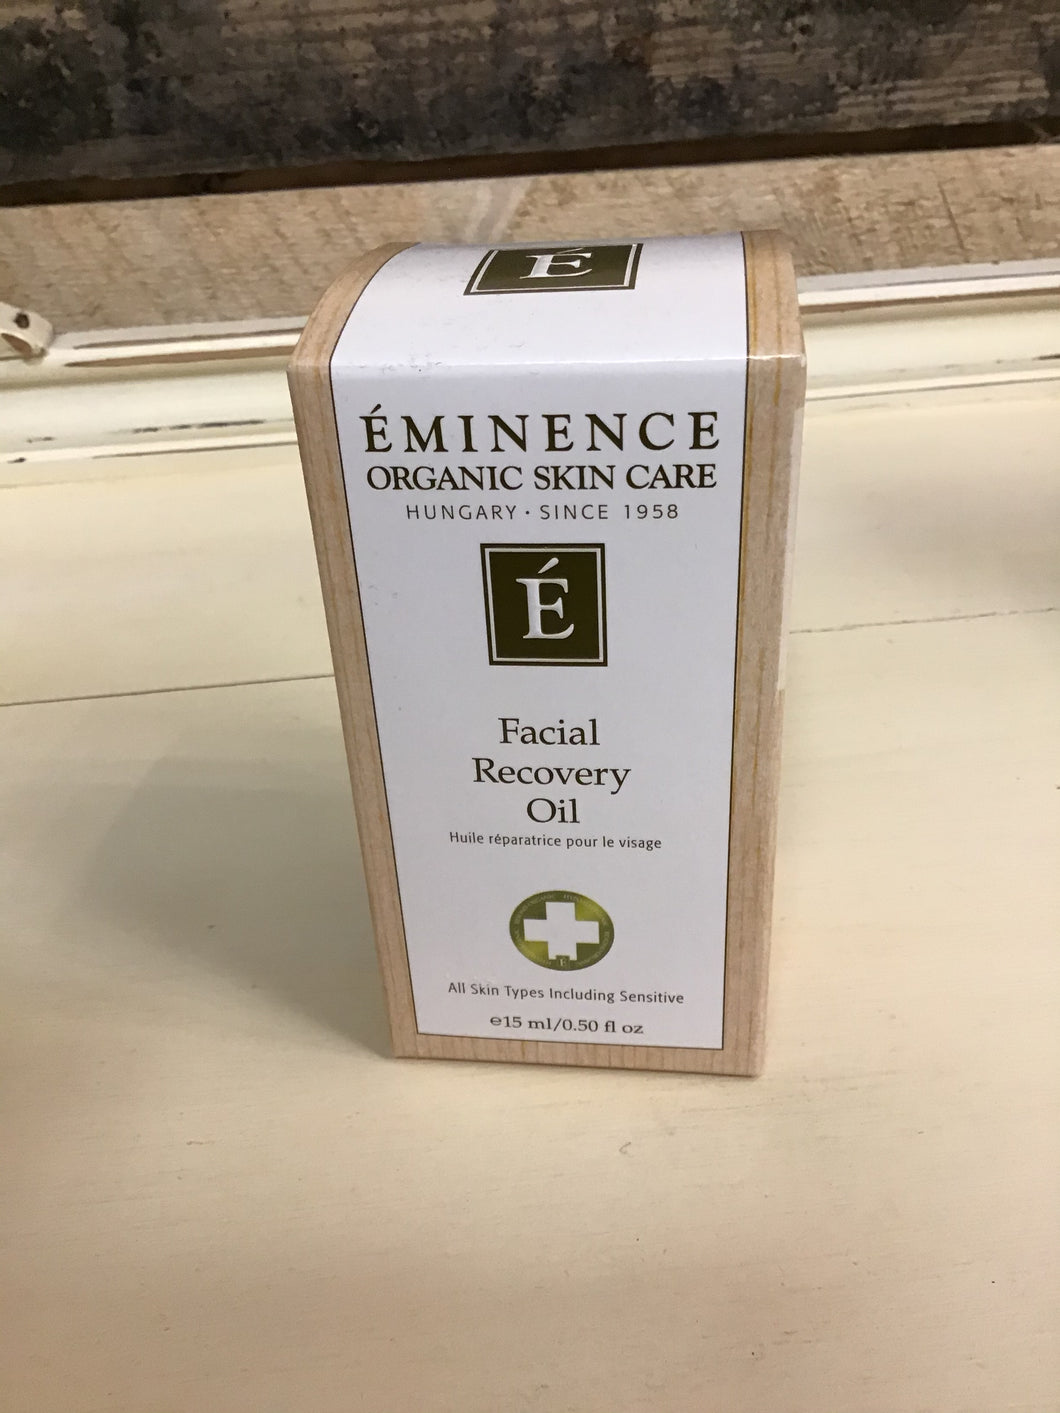 Facial recovery oil